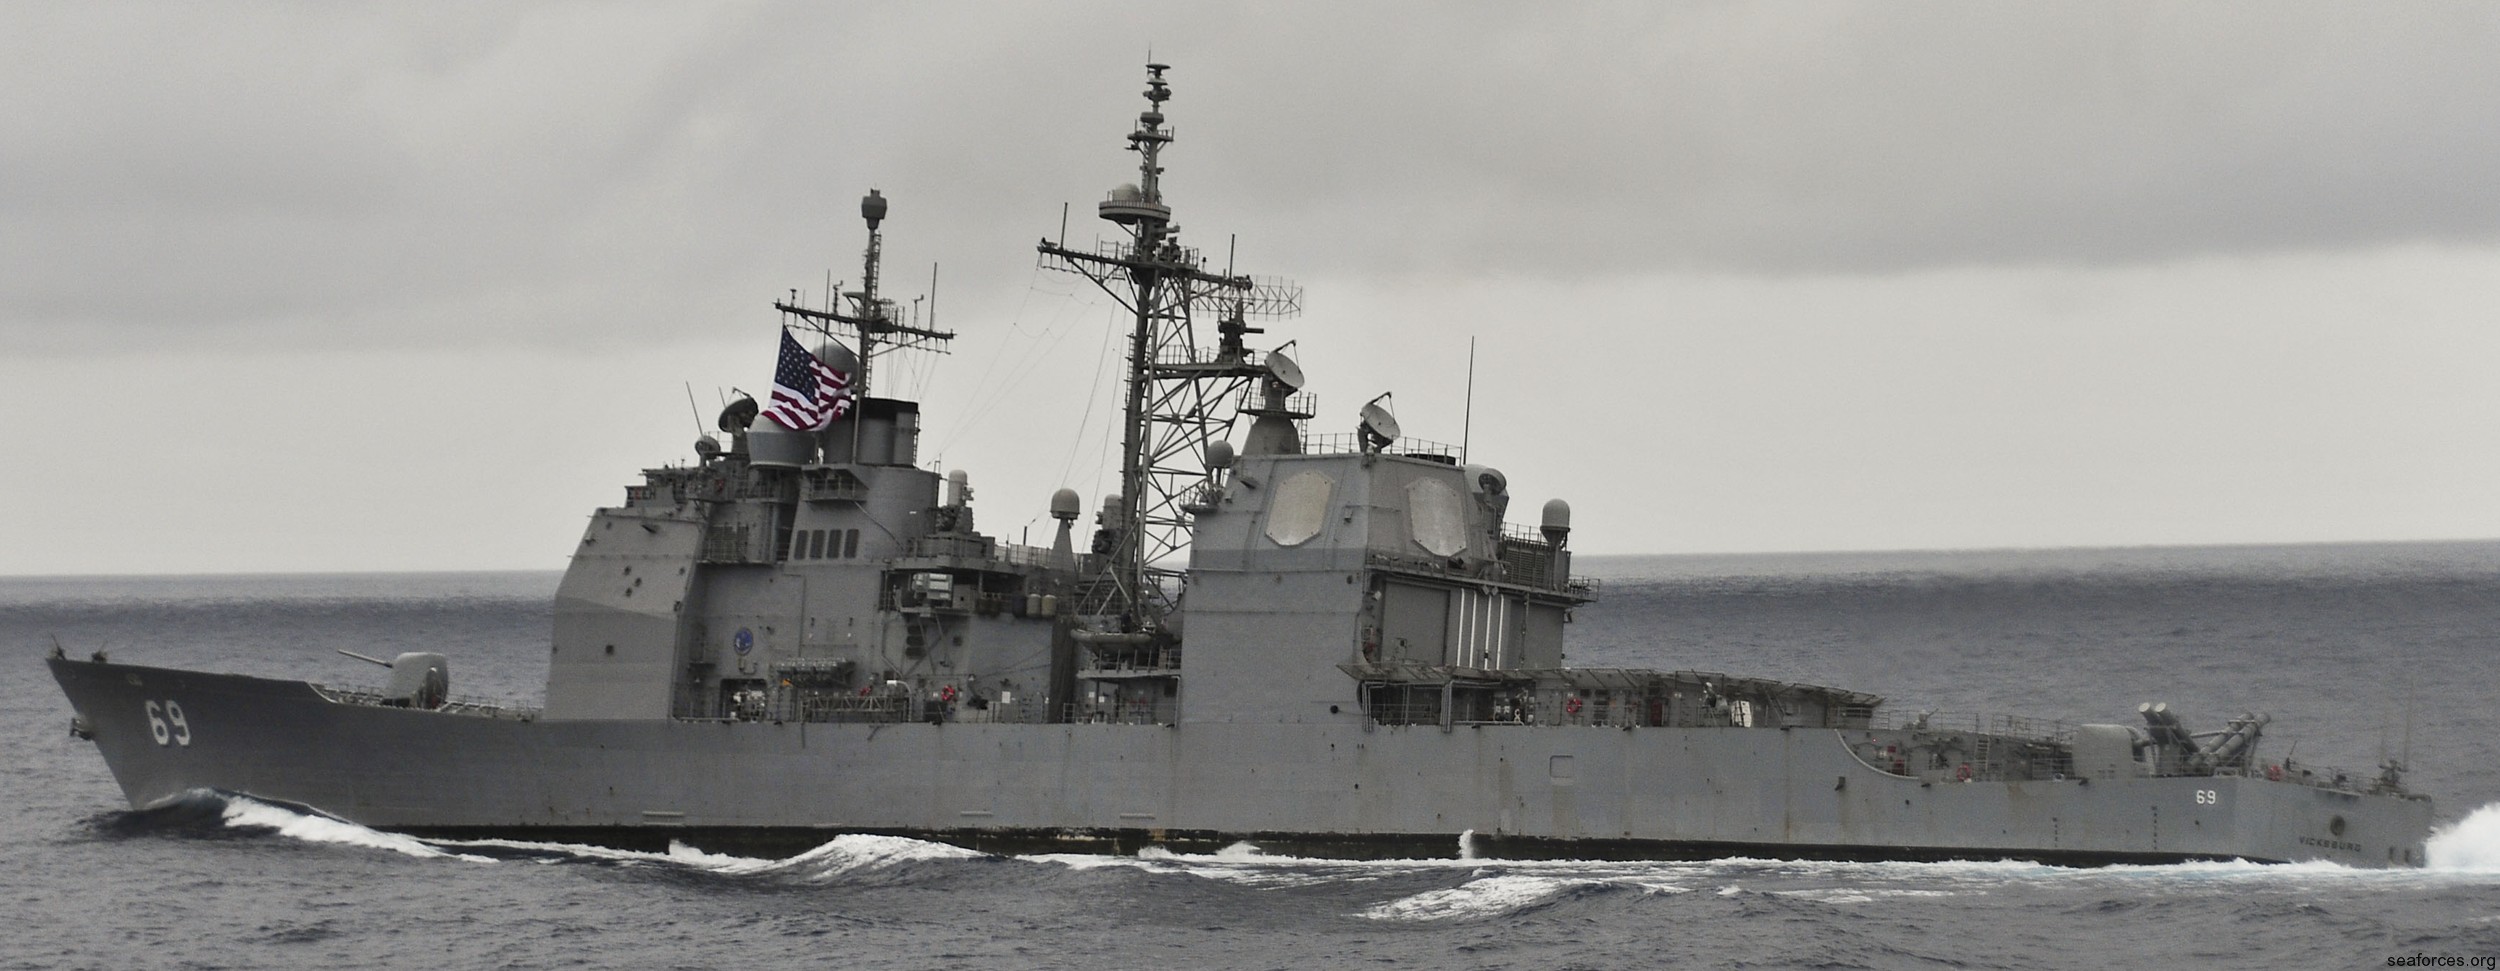 cg-69 uss vicksburg ticonderoga class guided missile cruiser us navy 22